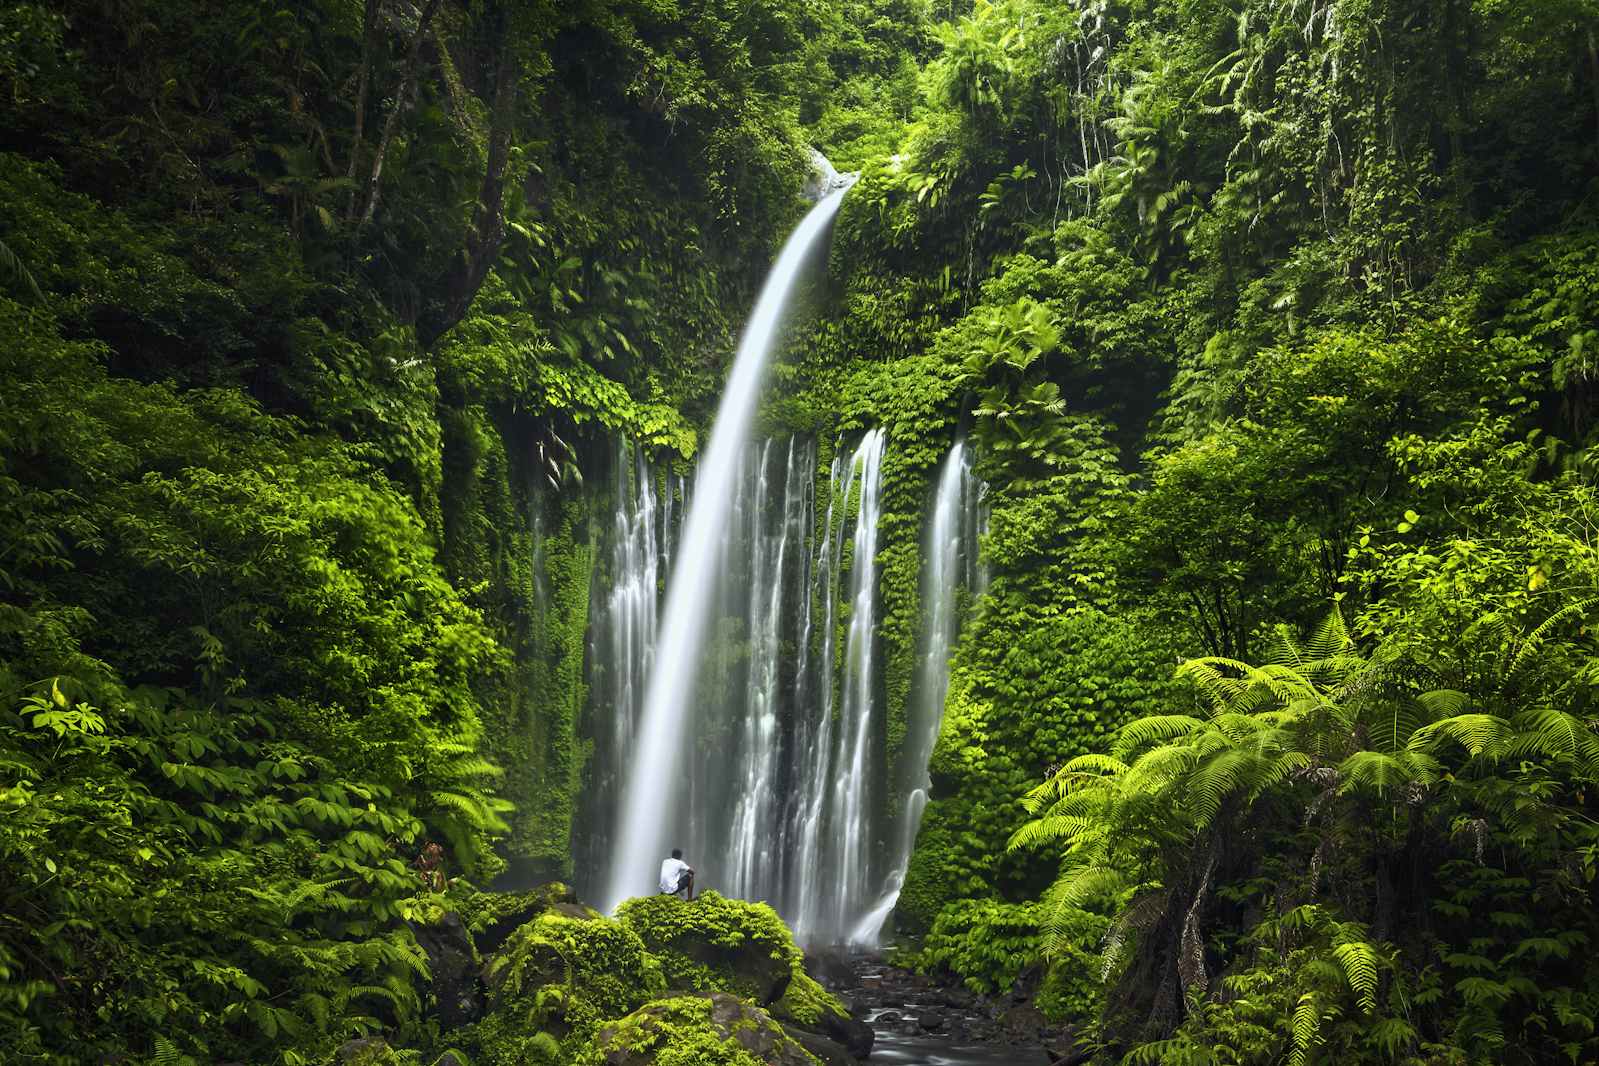 Air Terjun Tiu Kelep waterfall near Rinjani, Senaru, Lombok, Indonesia (Photo: Michail_Vorobyev/Shutterstock)